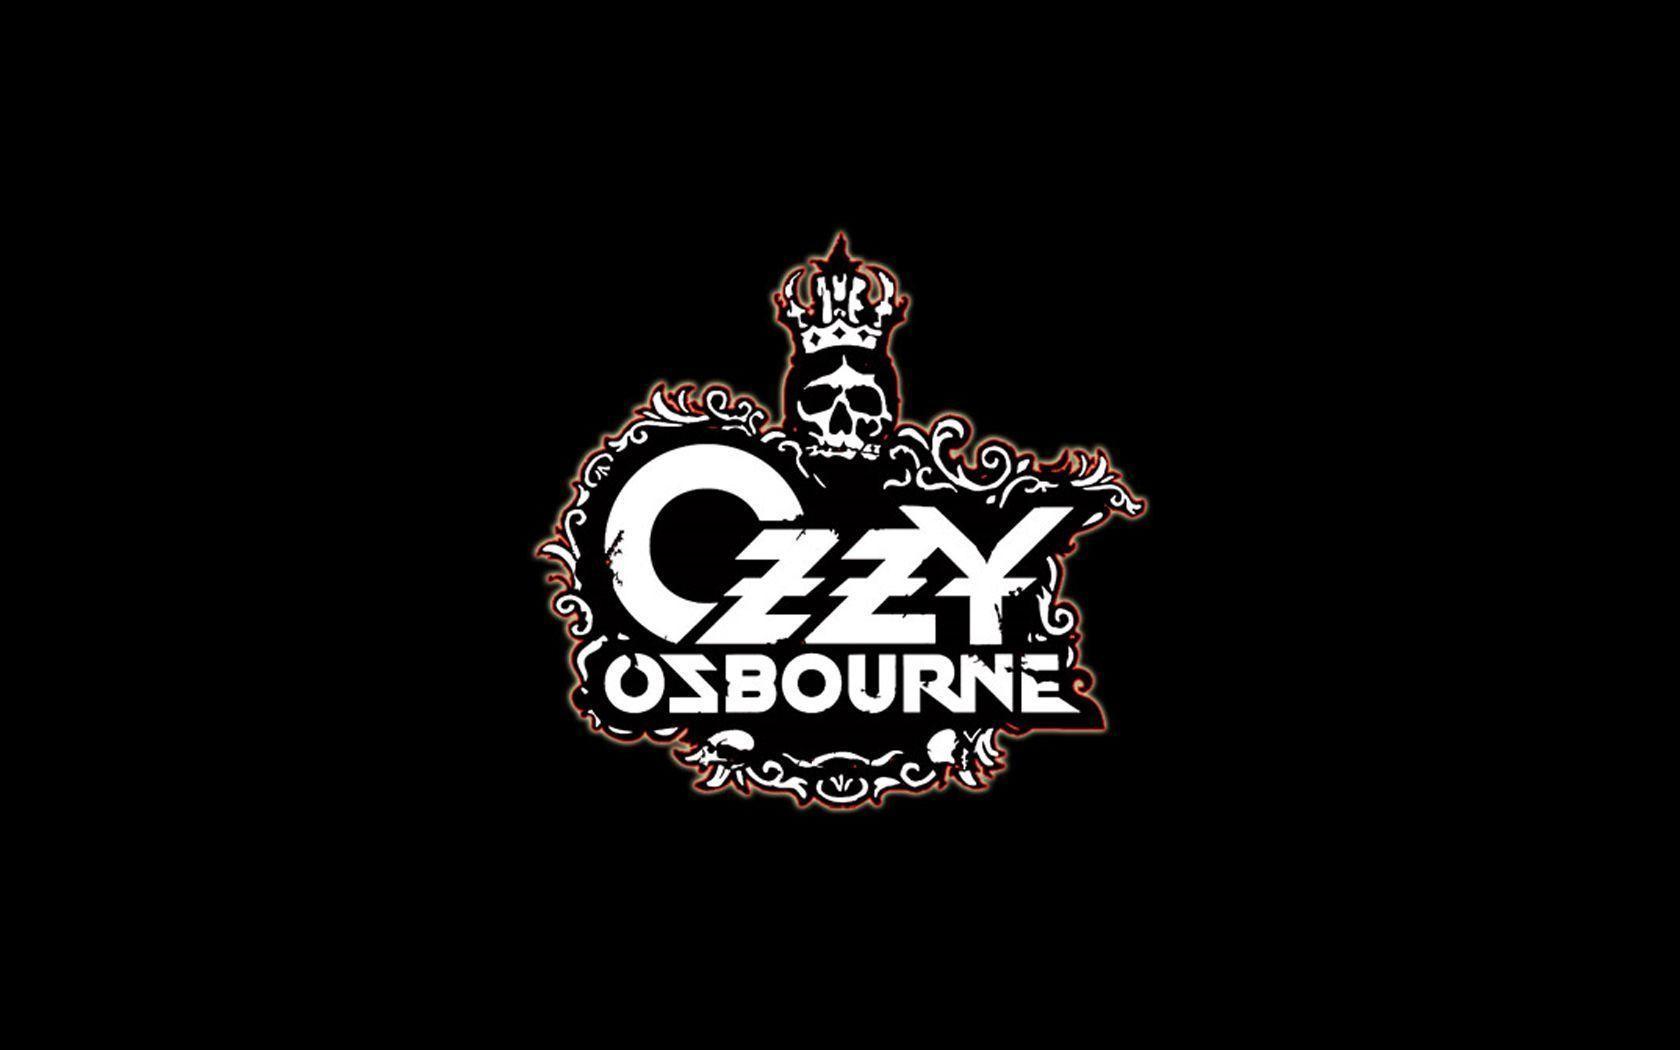 Fonds d&;écran Ozzy Osbourne, tous les wallpaper Ozzy Osbourne